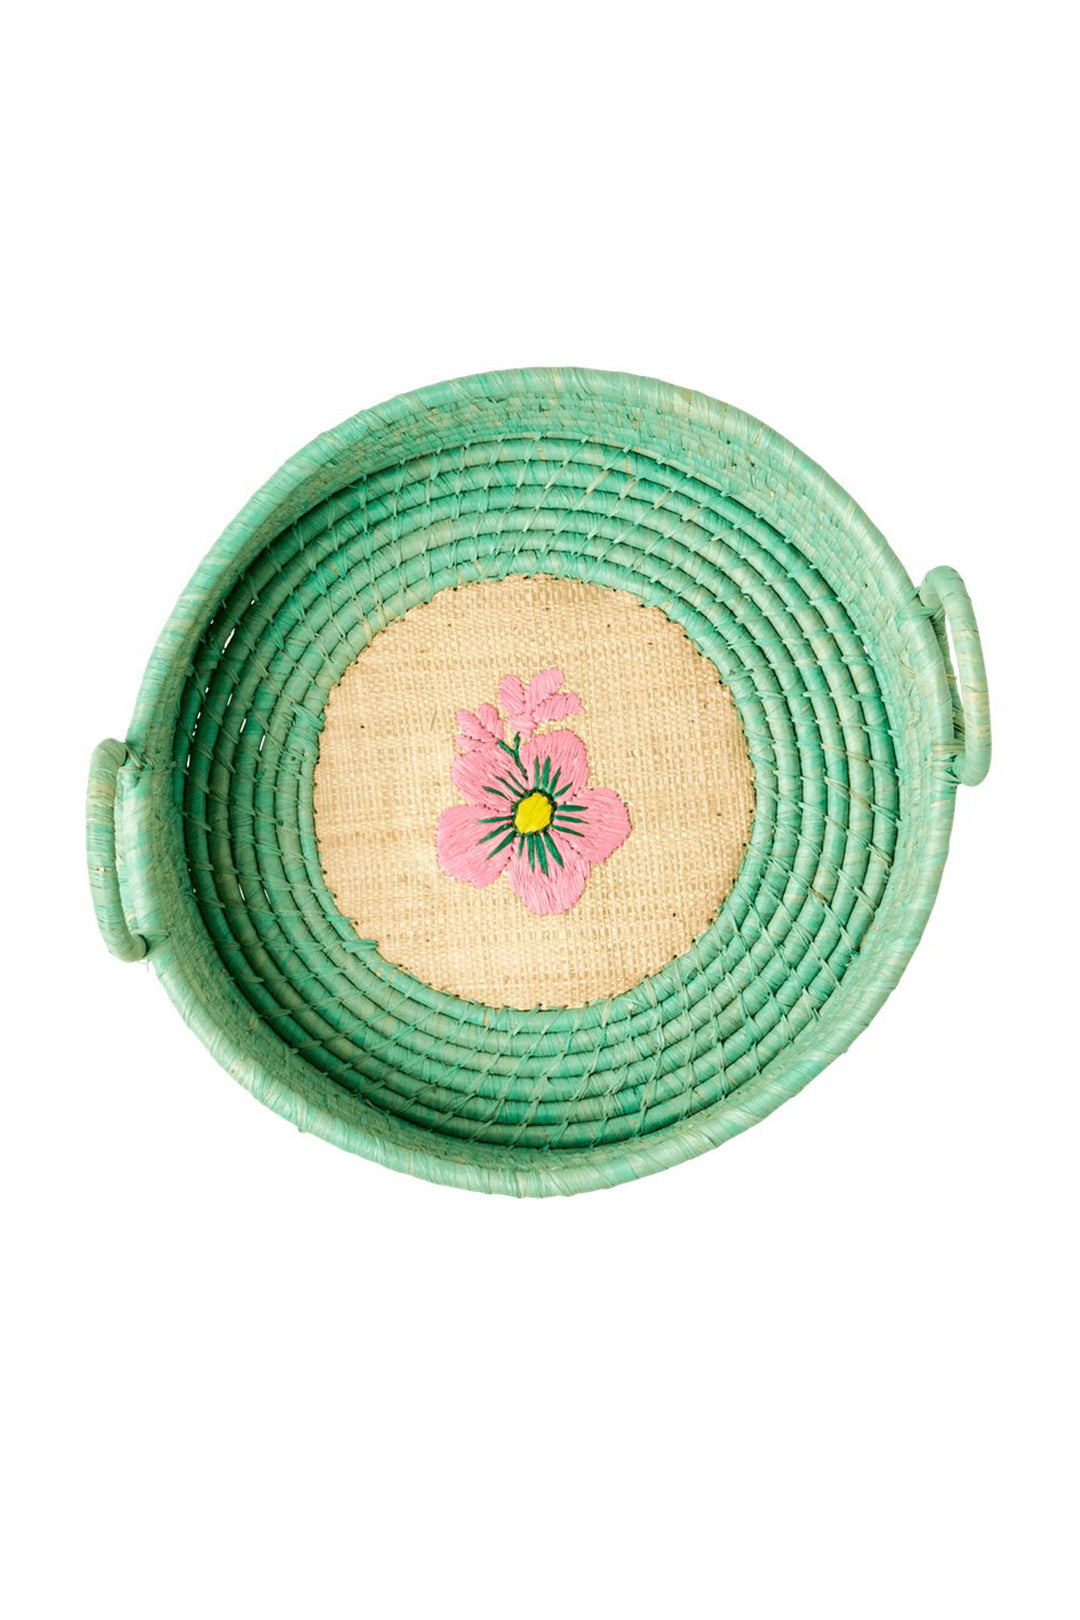 Raffia Round Bread Basket with Flower Embroidery Green